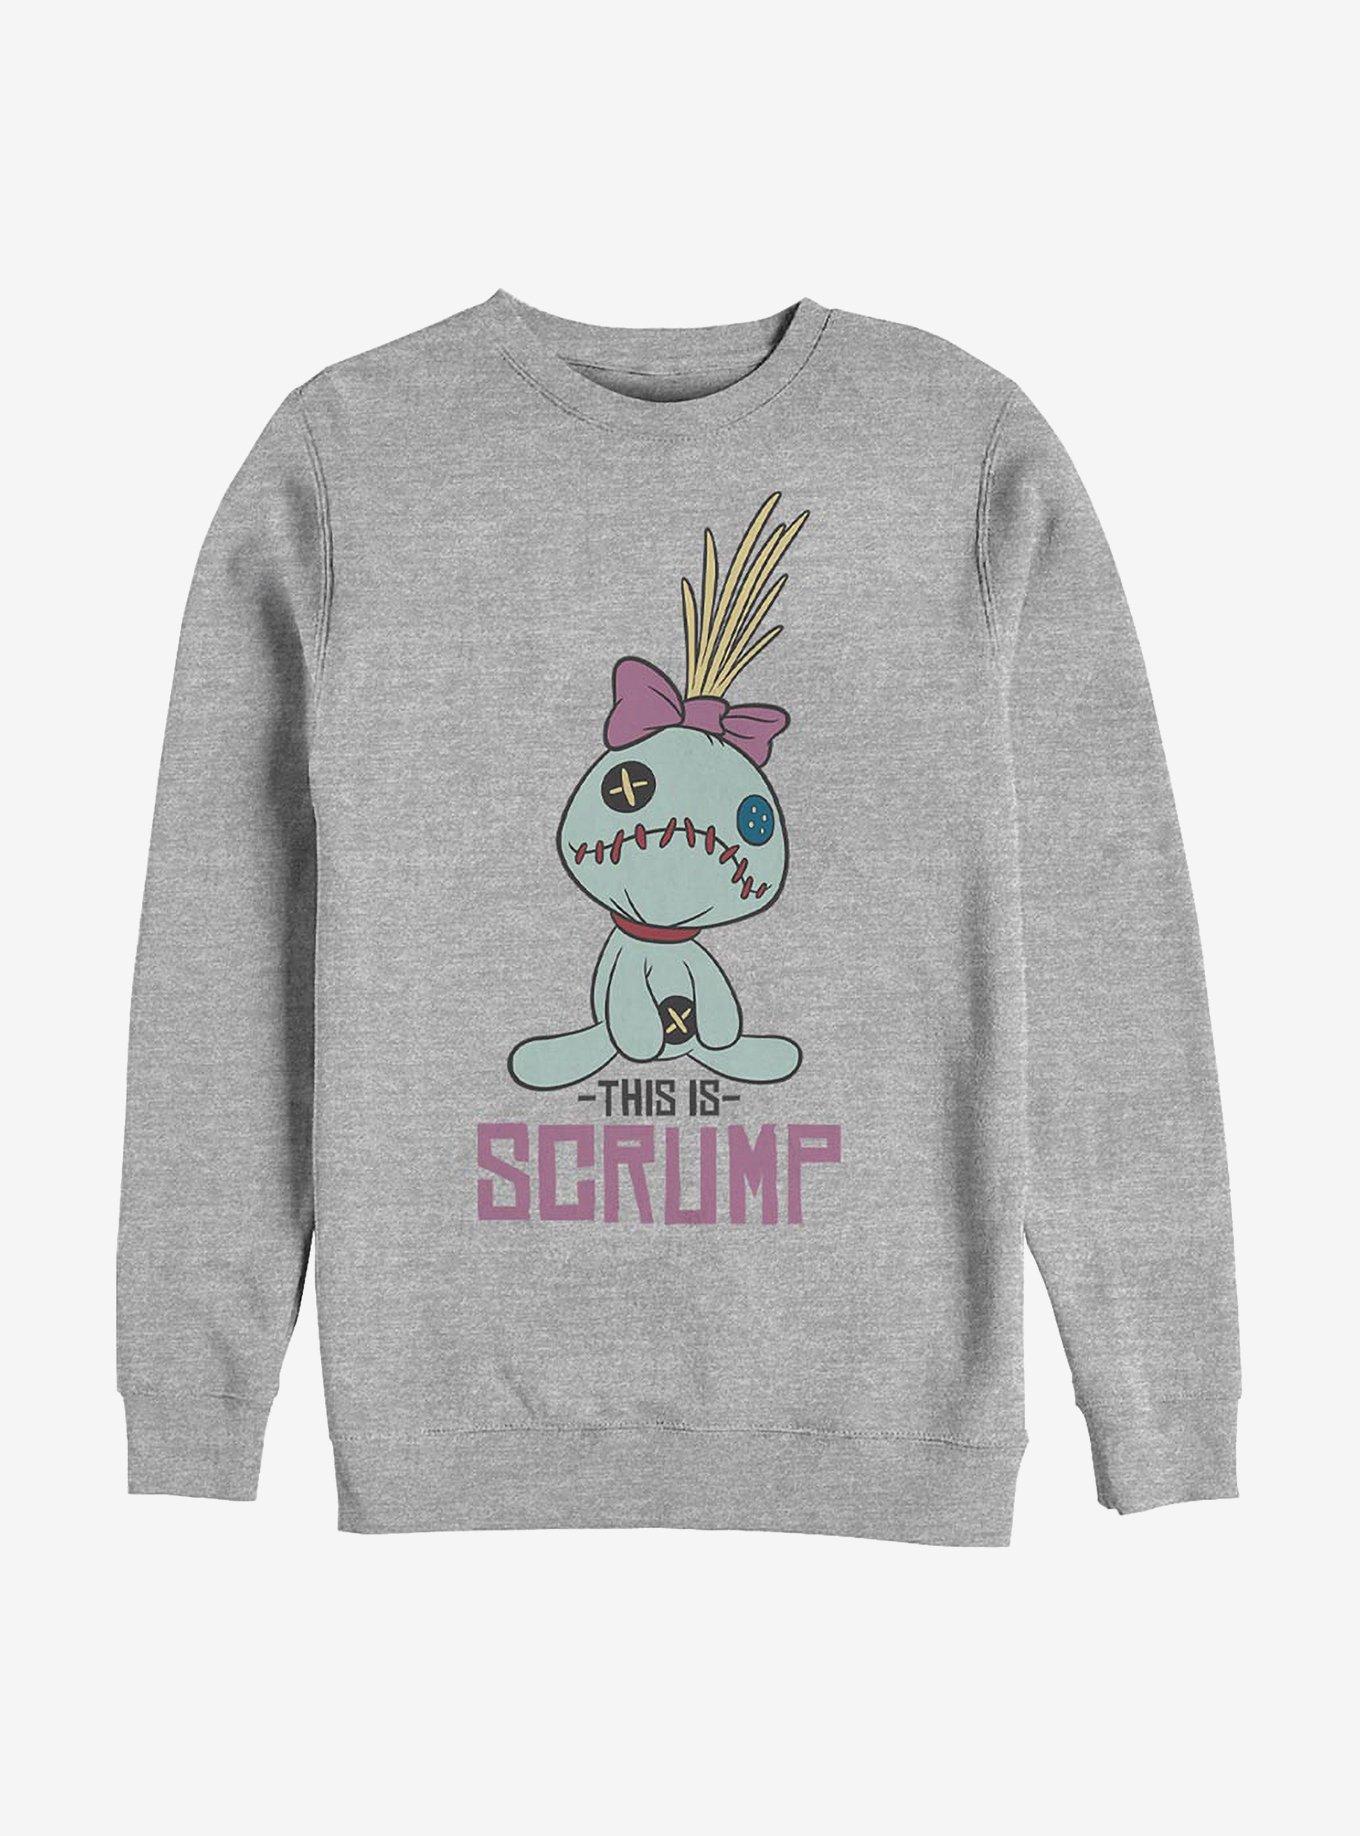 Hot Topic Disney Lilo & Stitch This Is Scrump Crew Sweatshirt